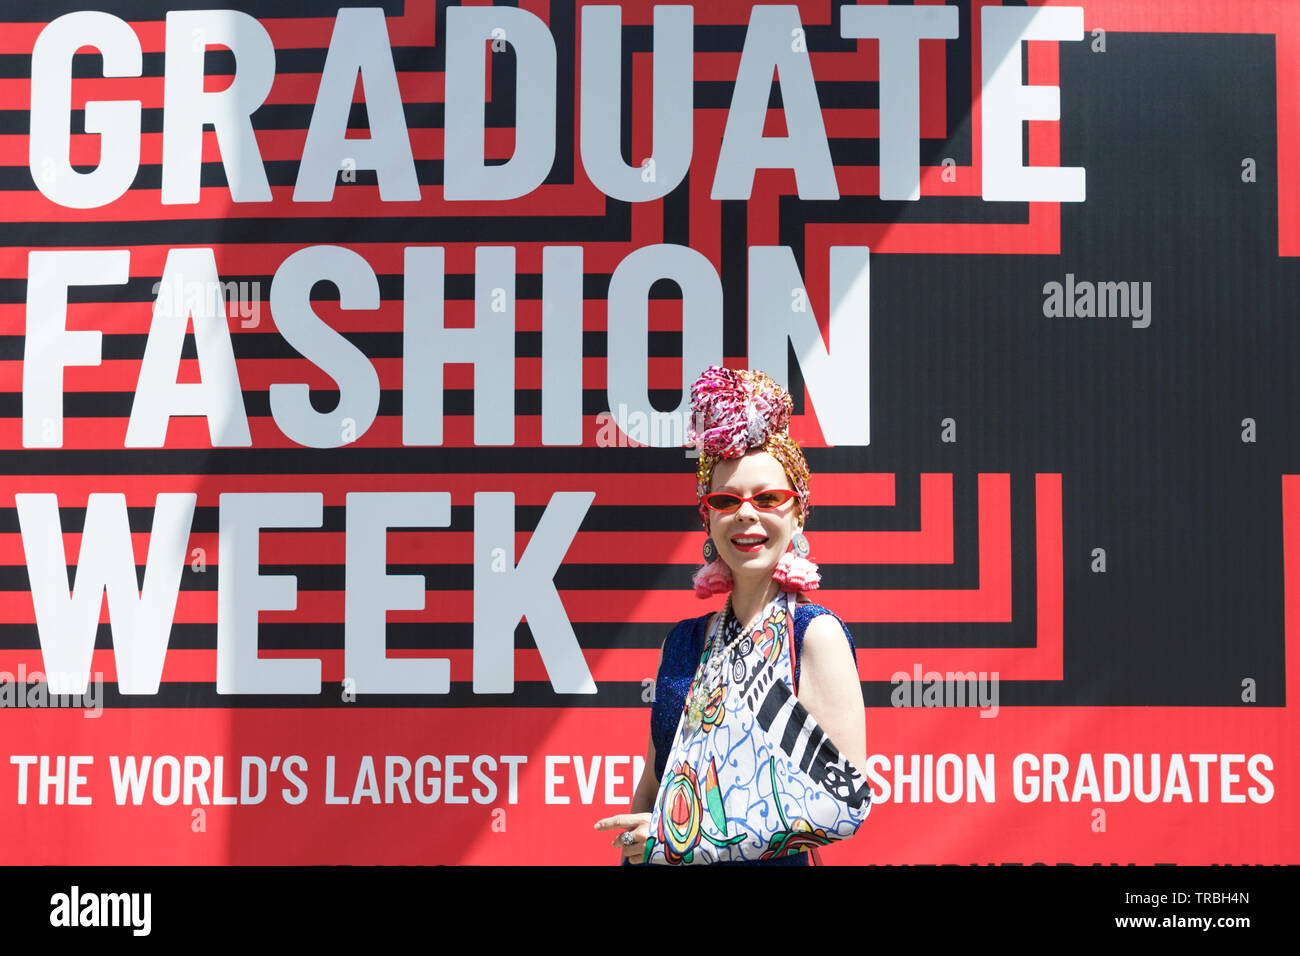 Graduate Fashion Week, London, UK. Fashion Week Show. Stock Photo